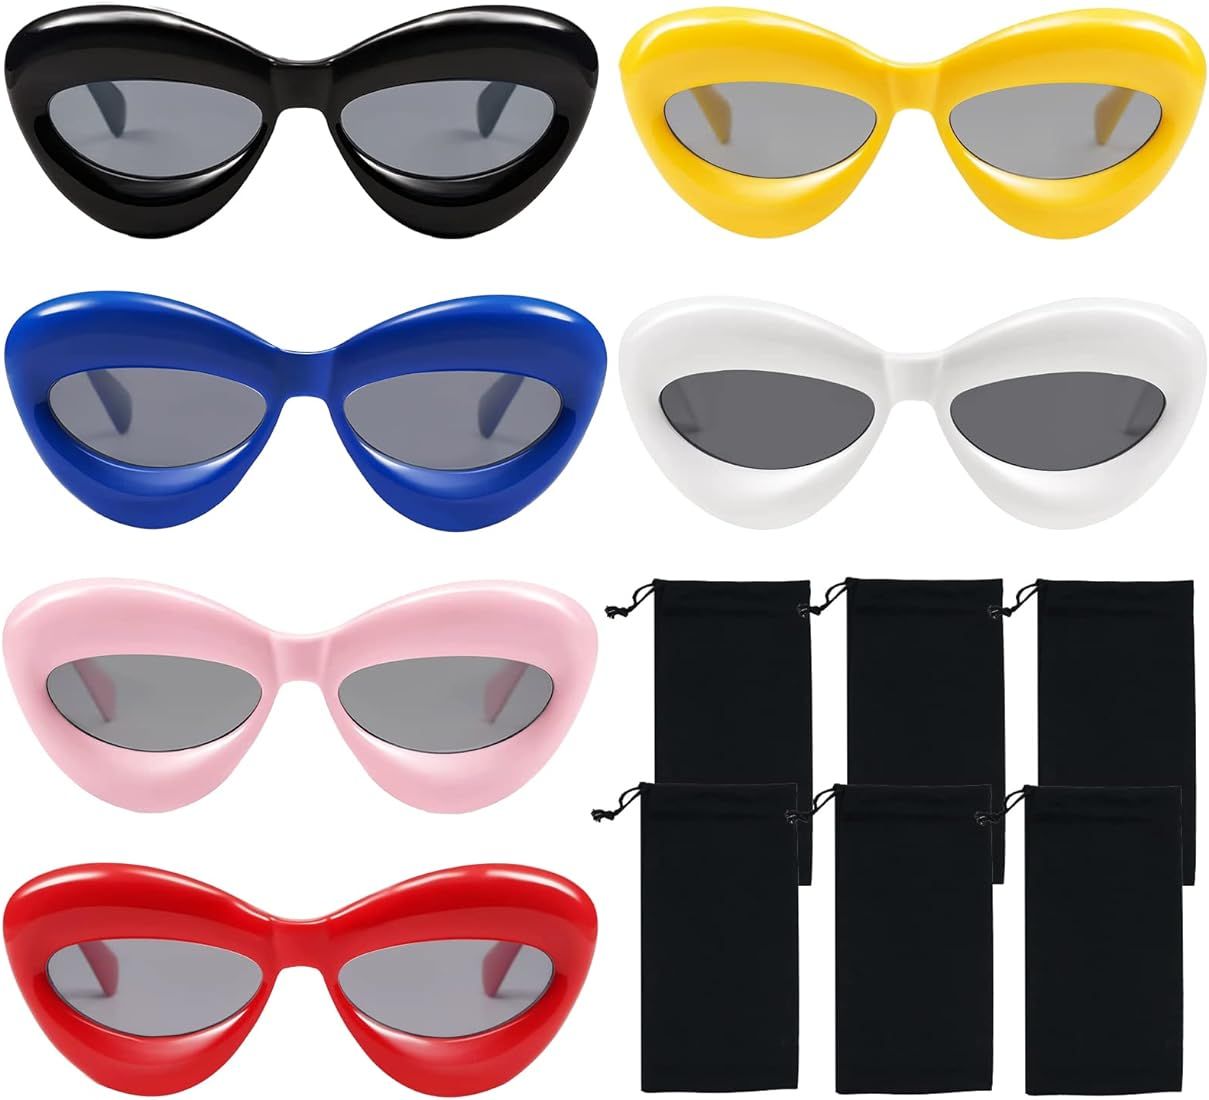 HOMSHIAM 6PCS Inflated Sunglasses, Inflated Fun Lip Shape Sunglasses for Festival Party, Fashion ... | Amazon (US)